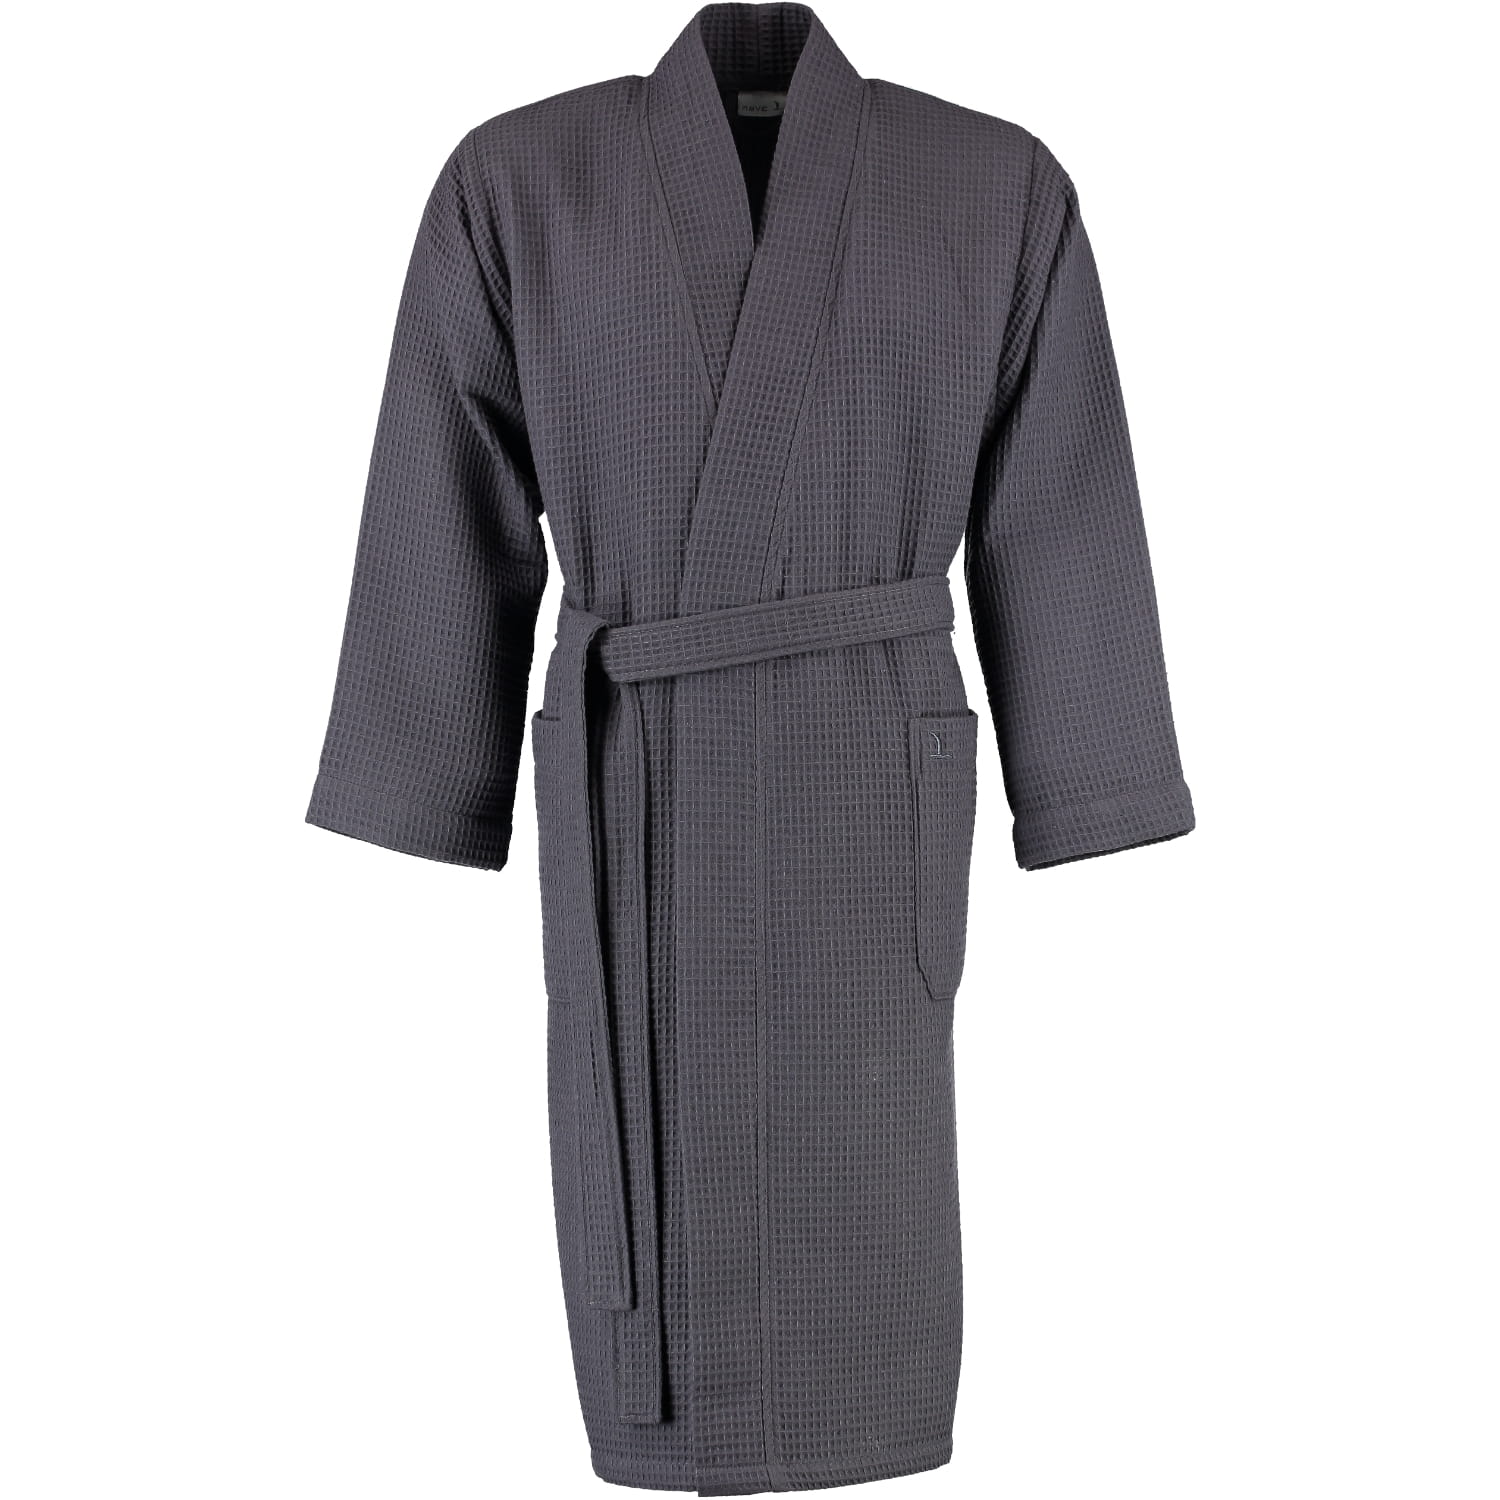 Möve Bademantel Kimono Homewear - graphit | (2-7612/0663) | Farbe: Bademantel - 843 unisex